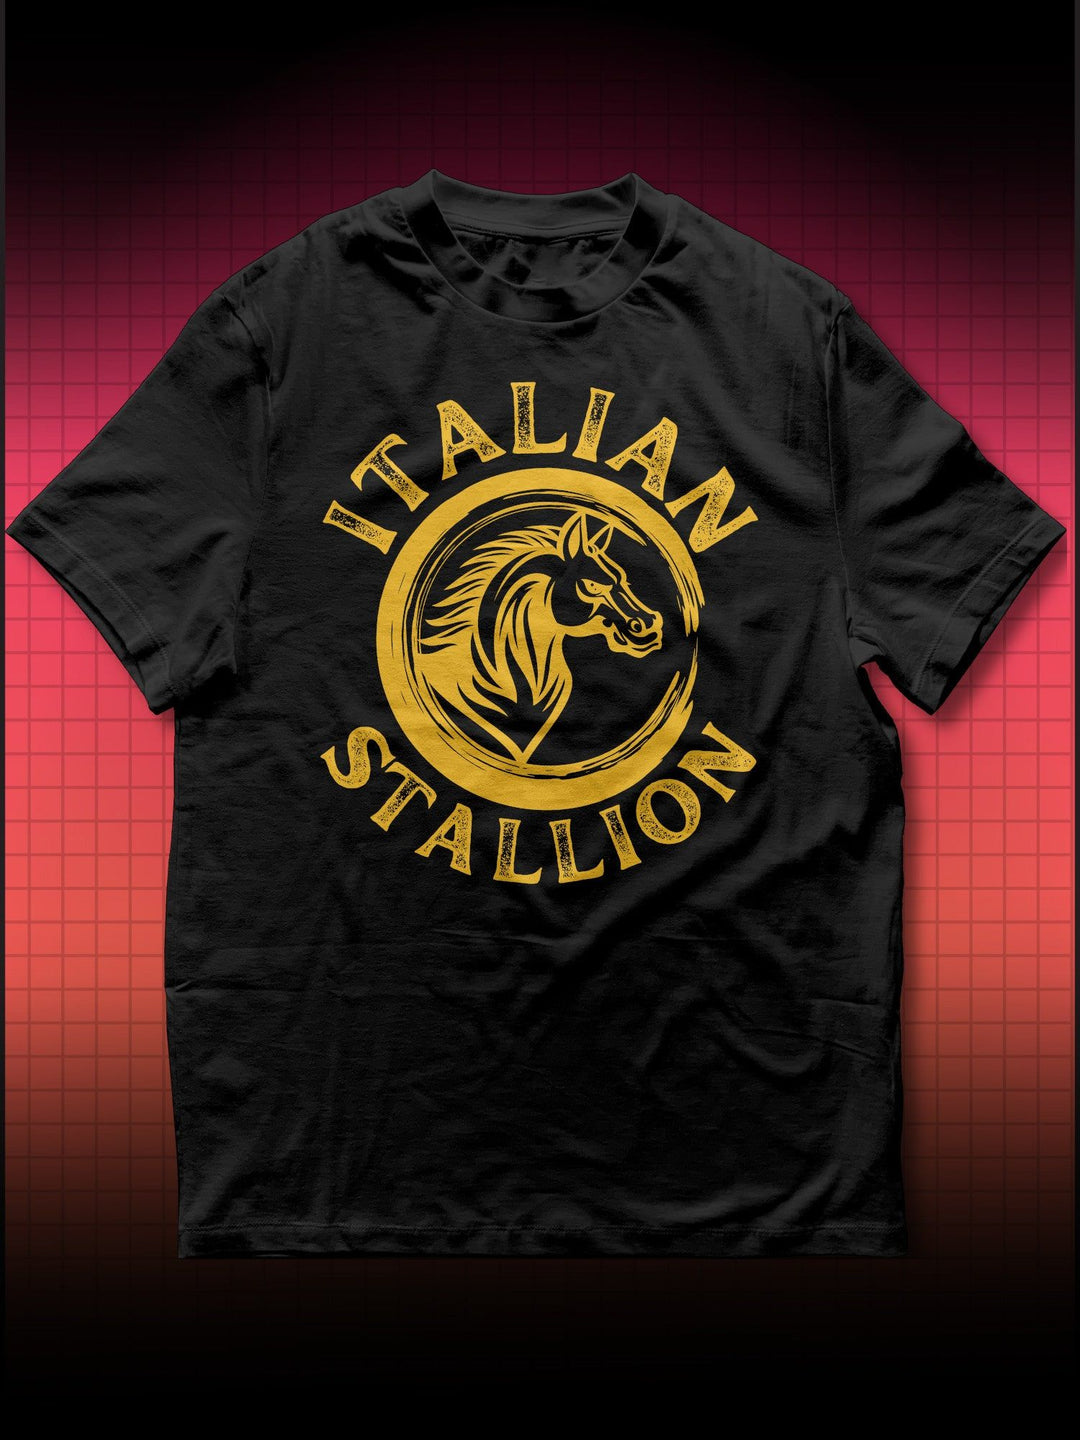 ITALIAN STALLION | ROCKY BALBOA - STALLONE | T-SHIRT - DRAMAMONKS